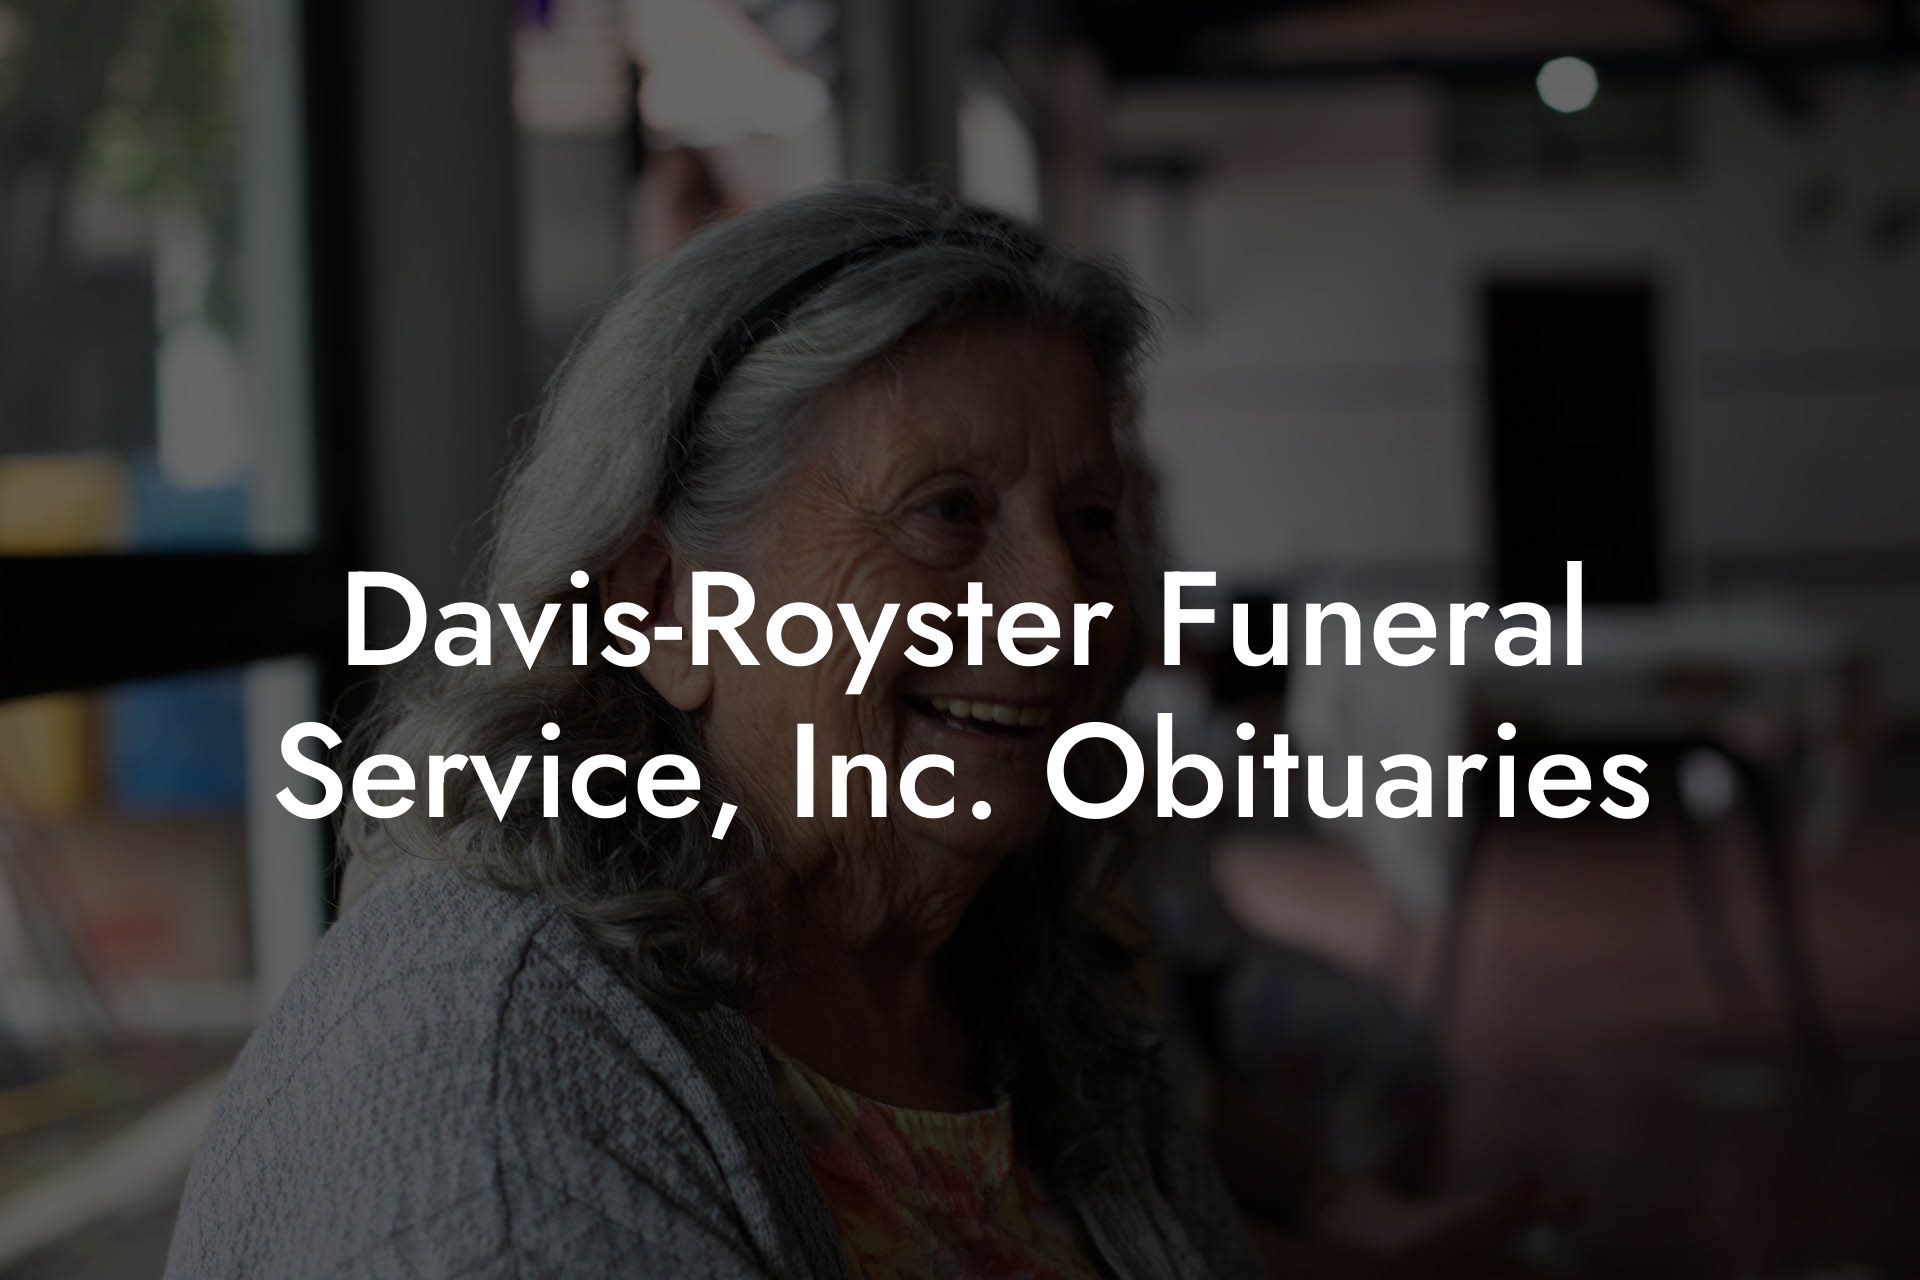 Davis-Royster Funeral Service, Inc. Obituaries